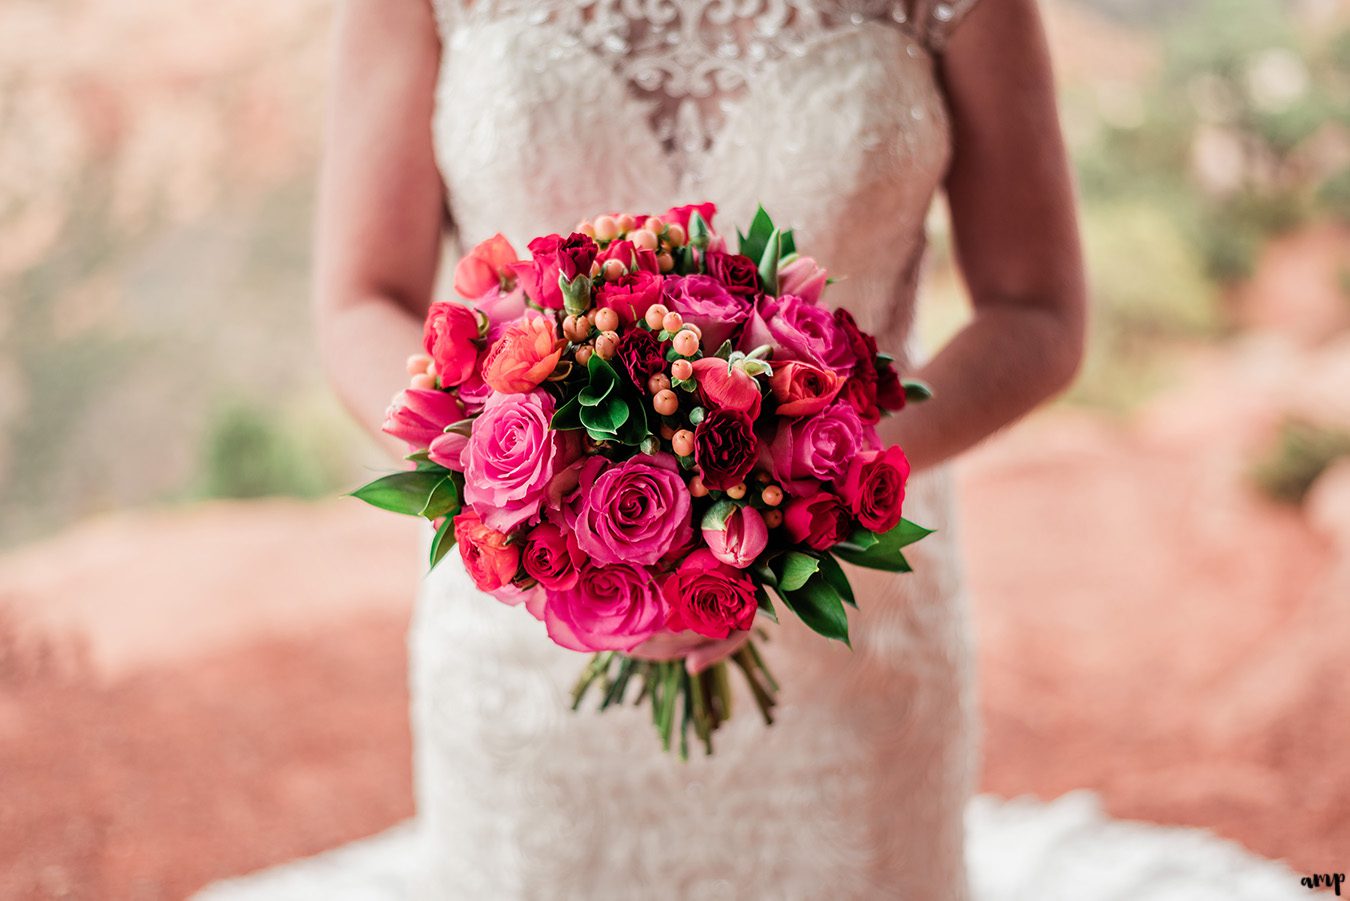 Spring wedding bouquet by Bride & Bloom Design in Grand Junction